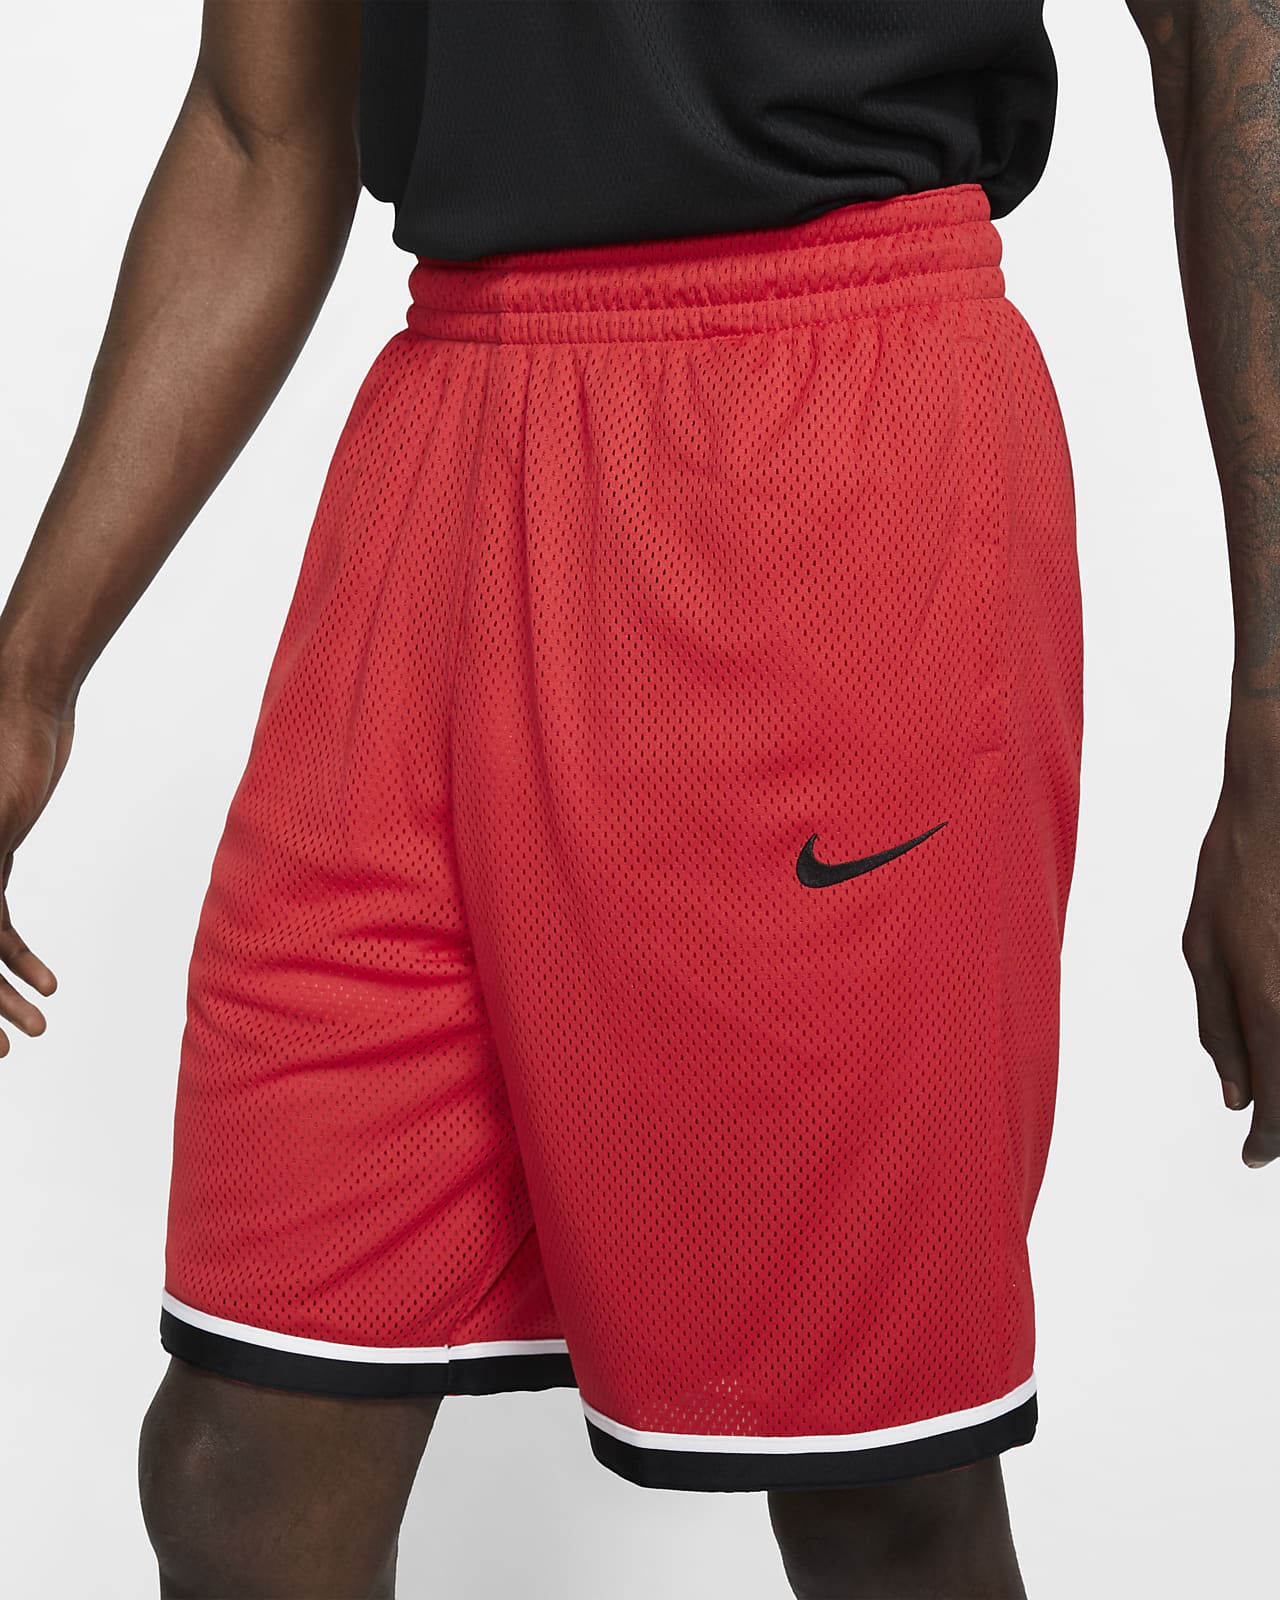 red nike basketball shorts